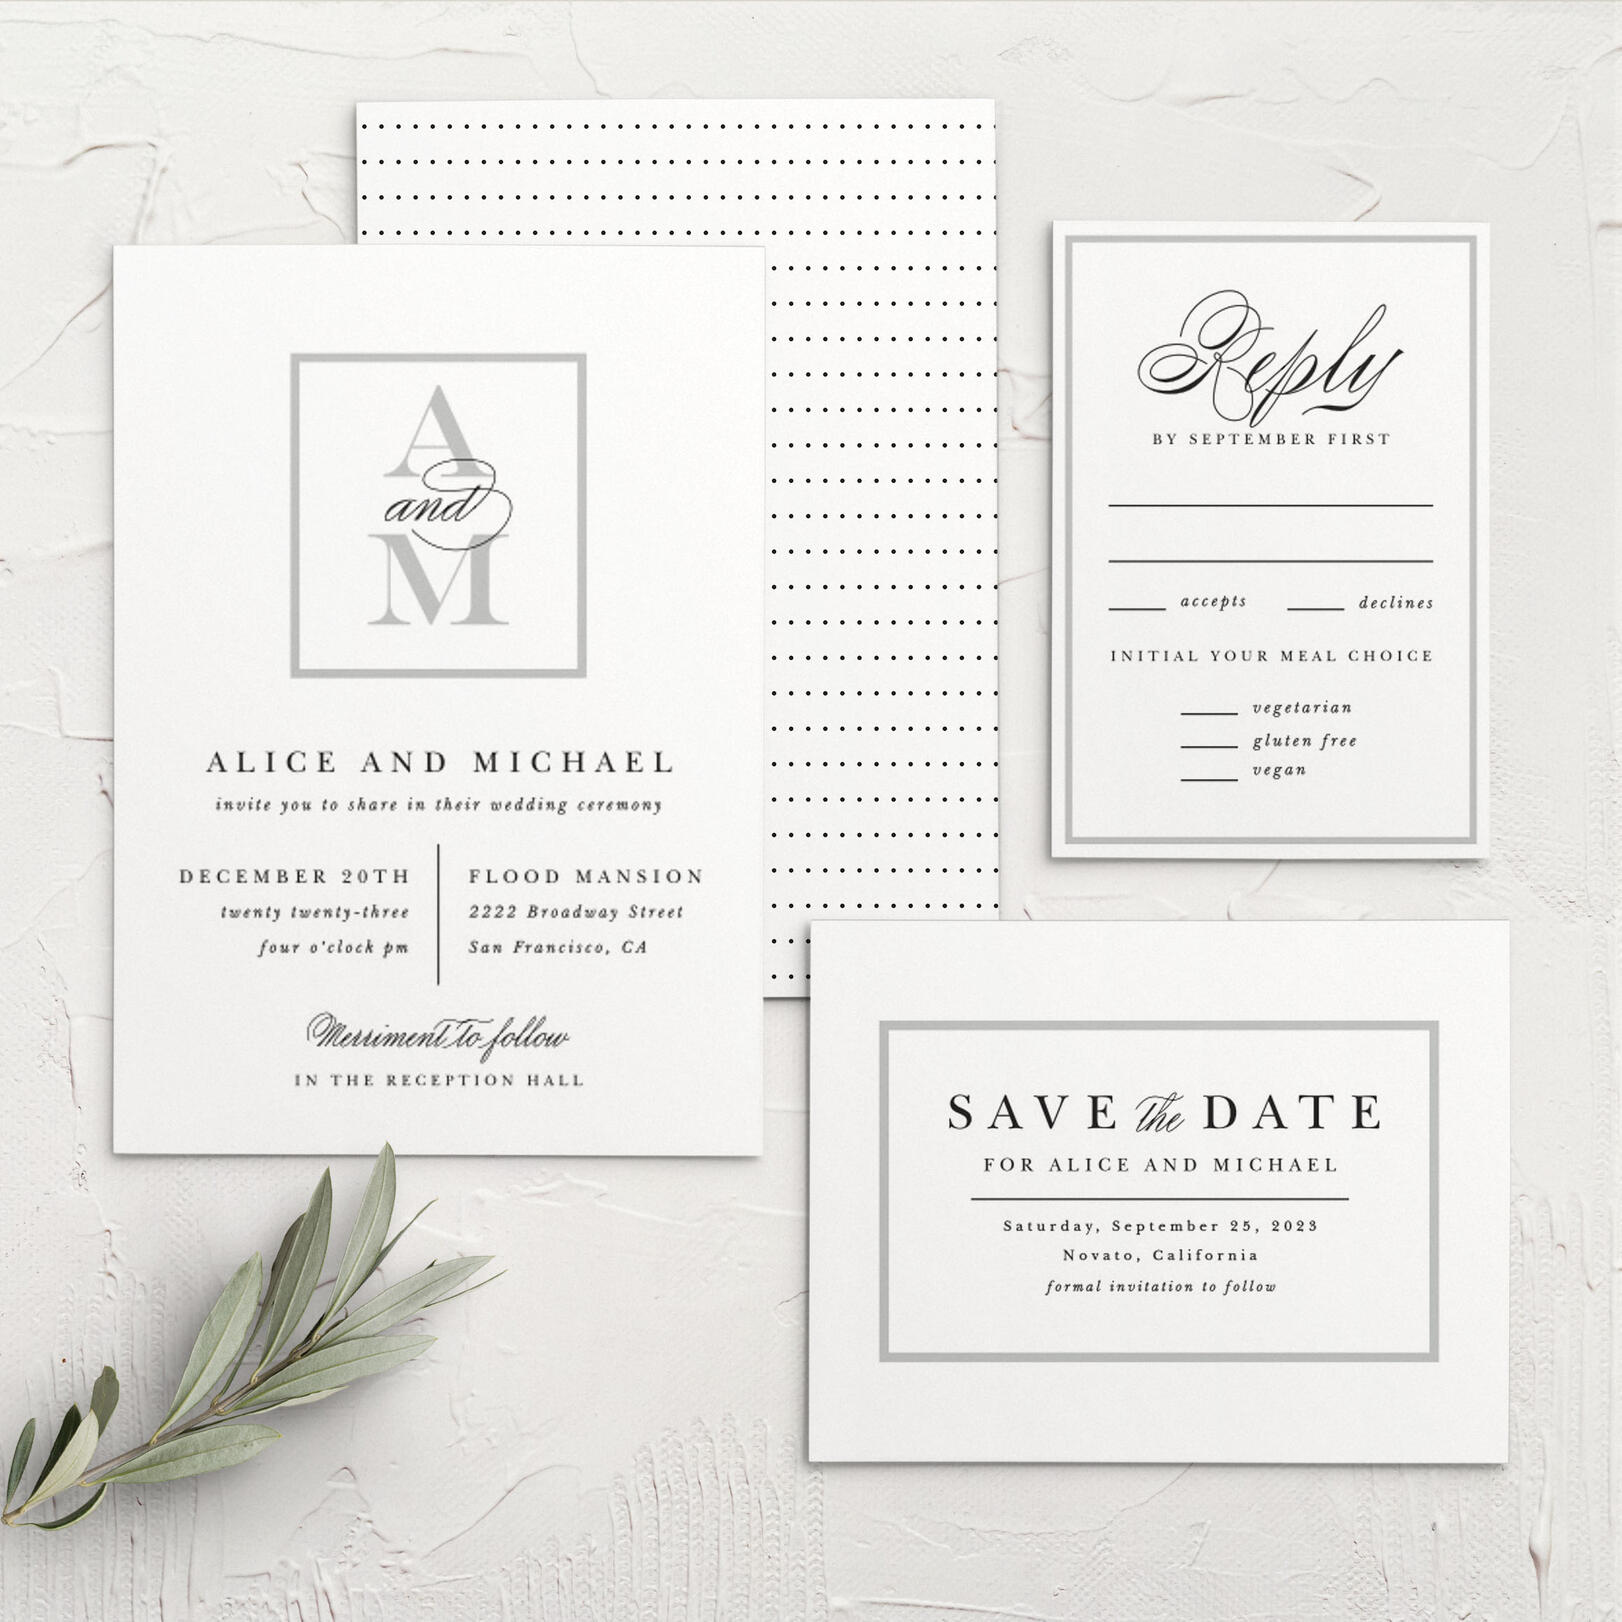 Monogram Square Portrait Wedding Invitations by Basic Invite